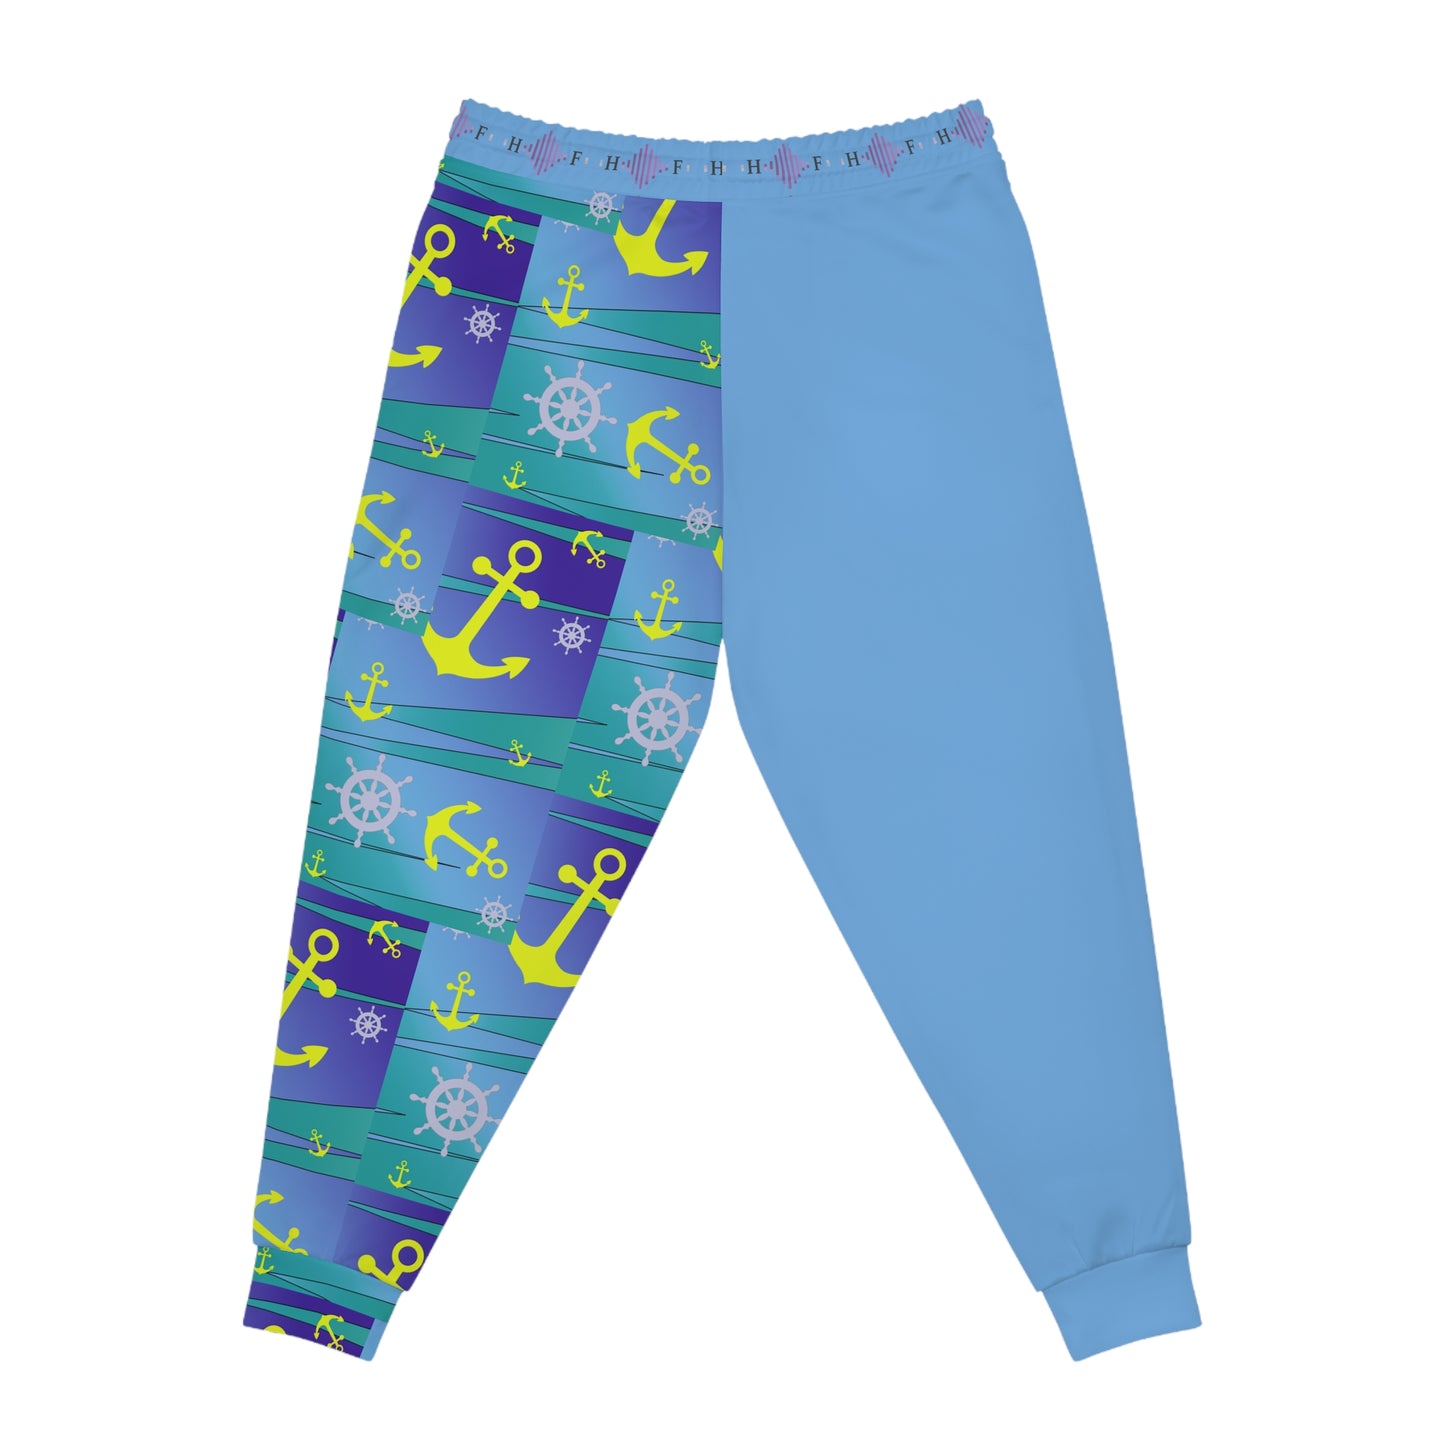 Anchors Ahoy - Pantalon de jogging athlétique (AOP)